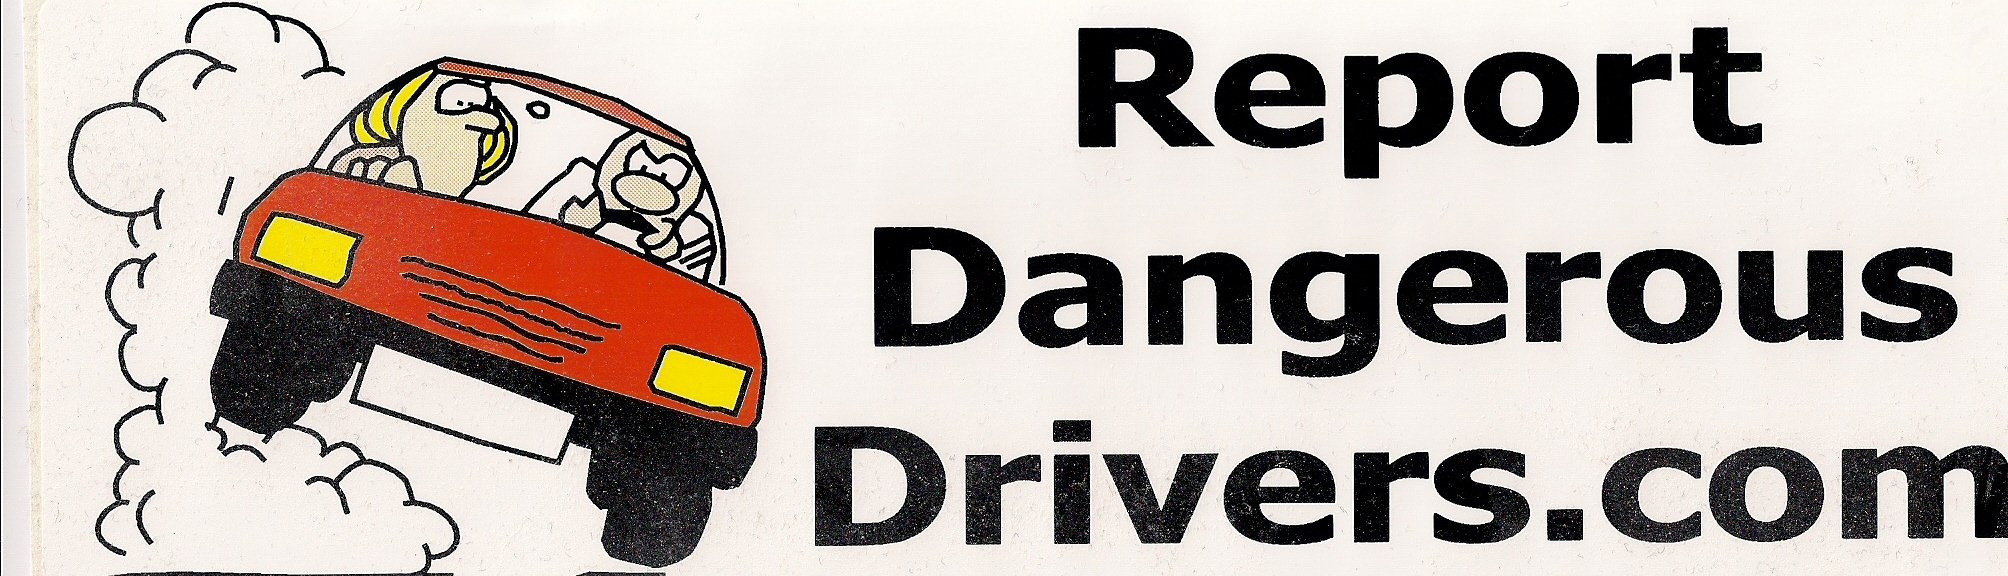 Report Dangerous Drivers .com